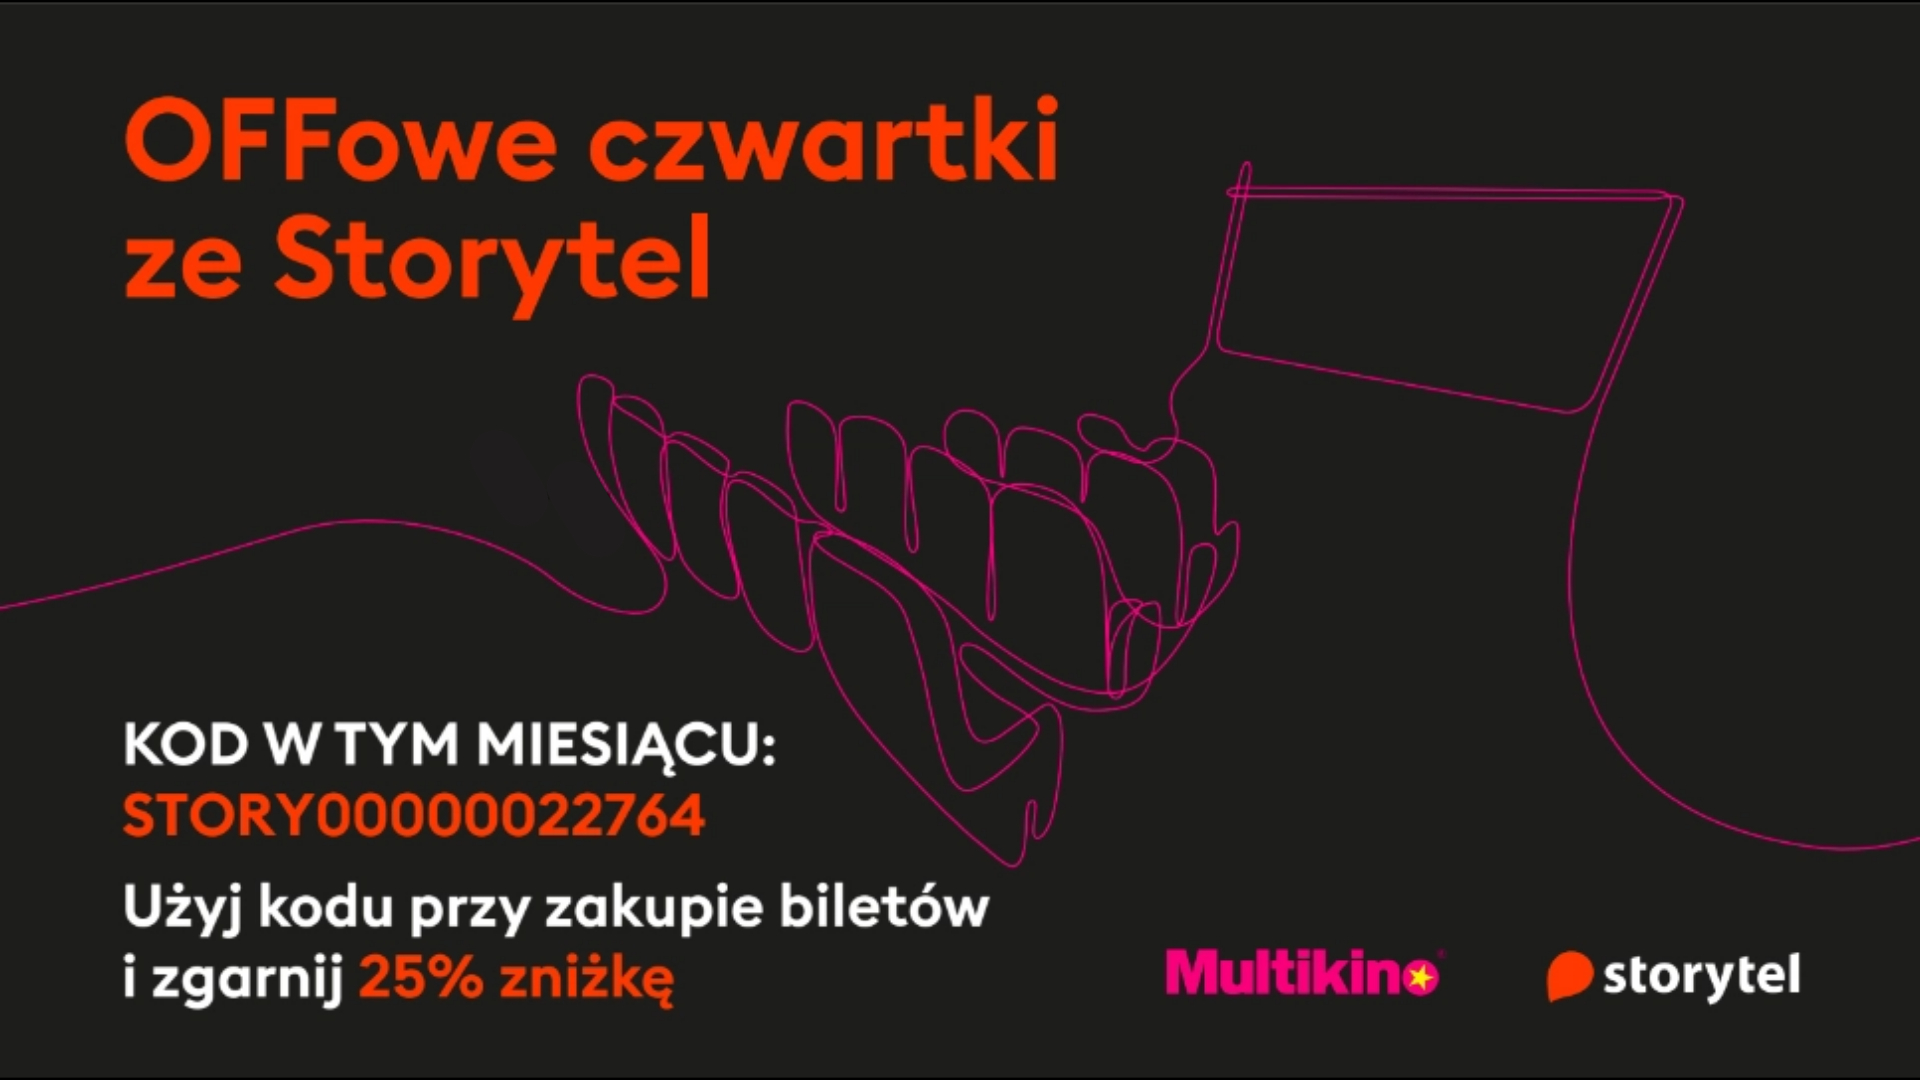 storytel and cinema Multikino partnership information